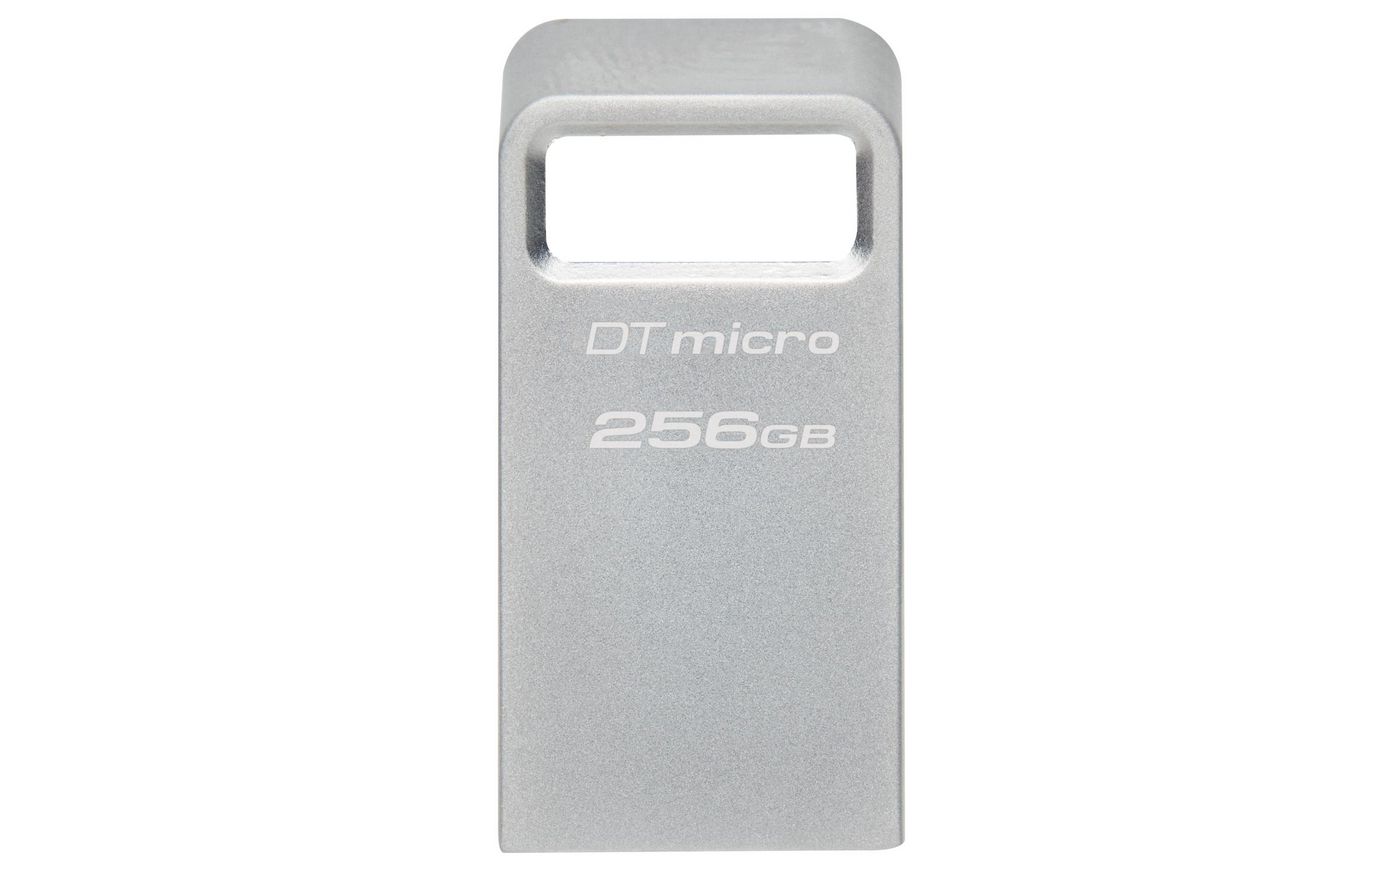 Kingston DTMC3G2256GB W128241166 Technology DataTraveler Micro 